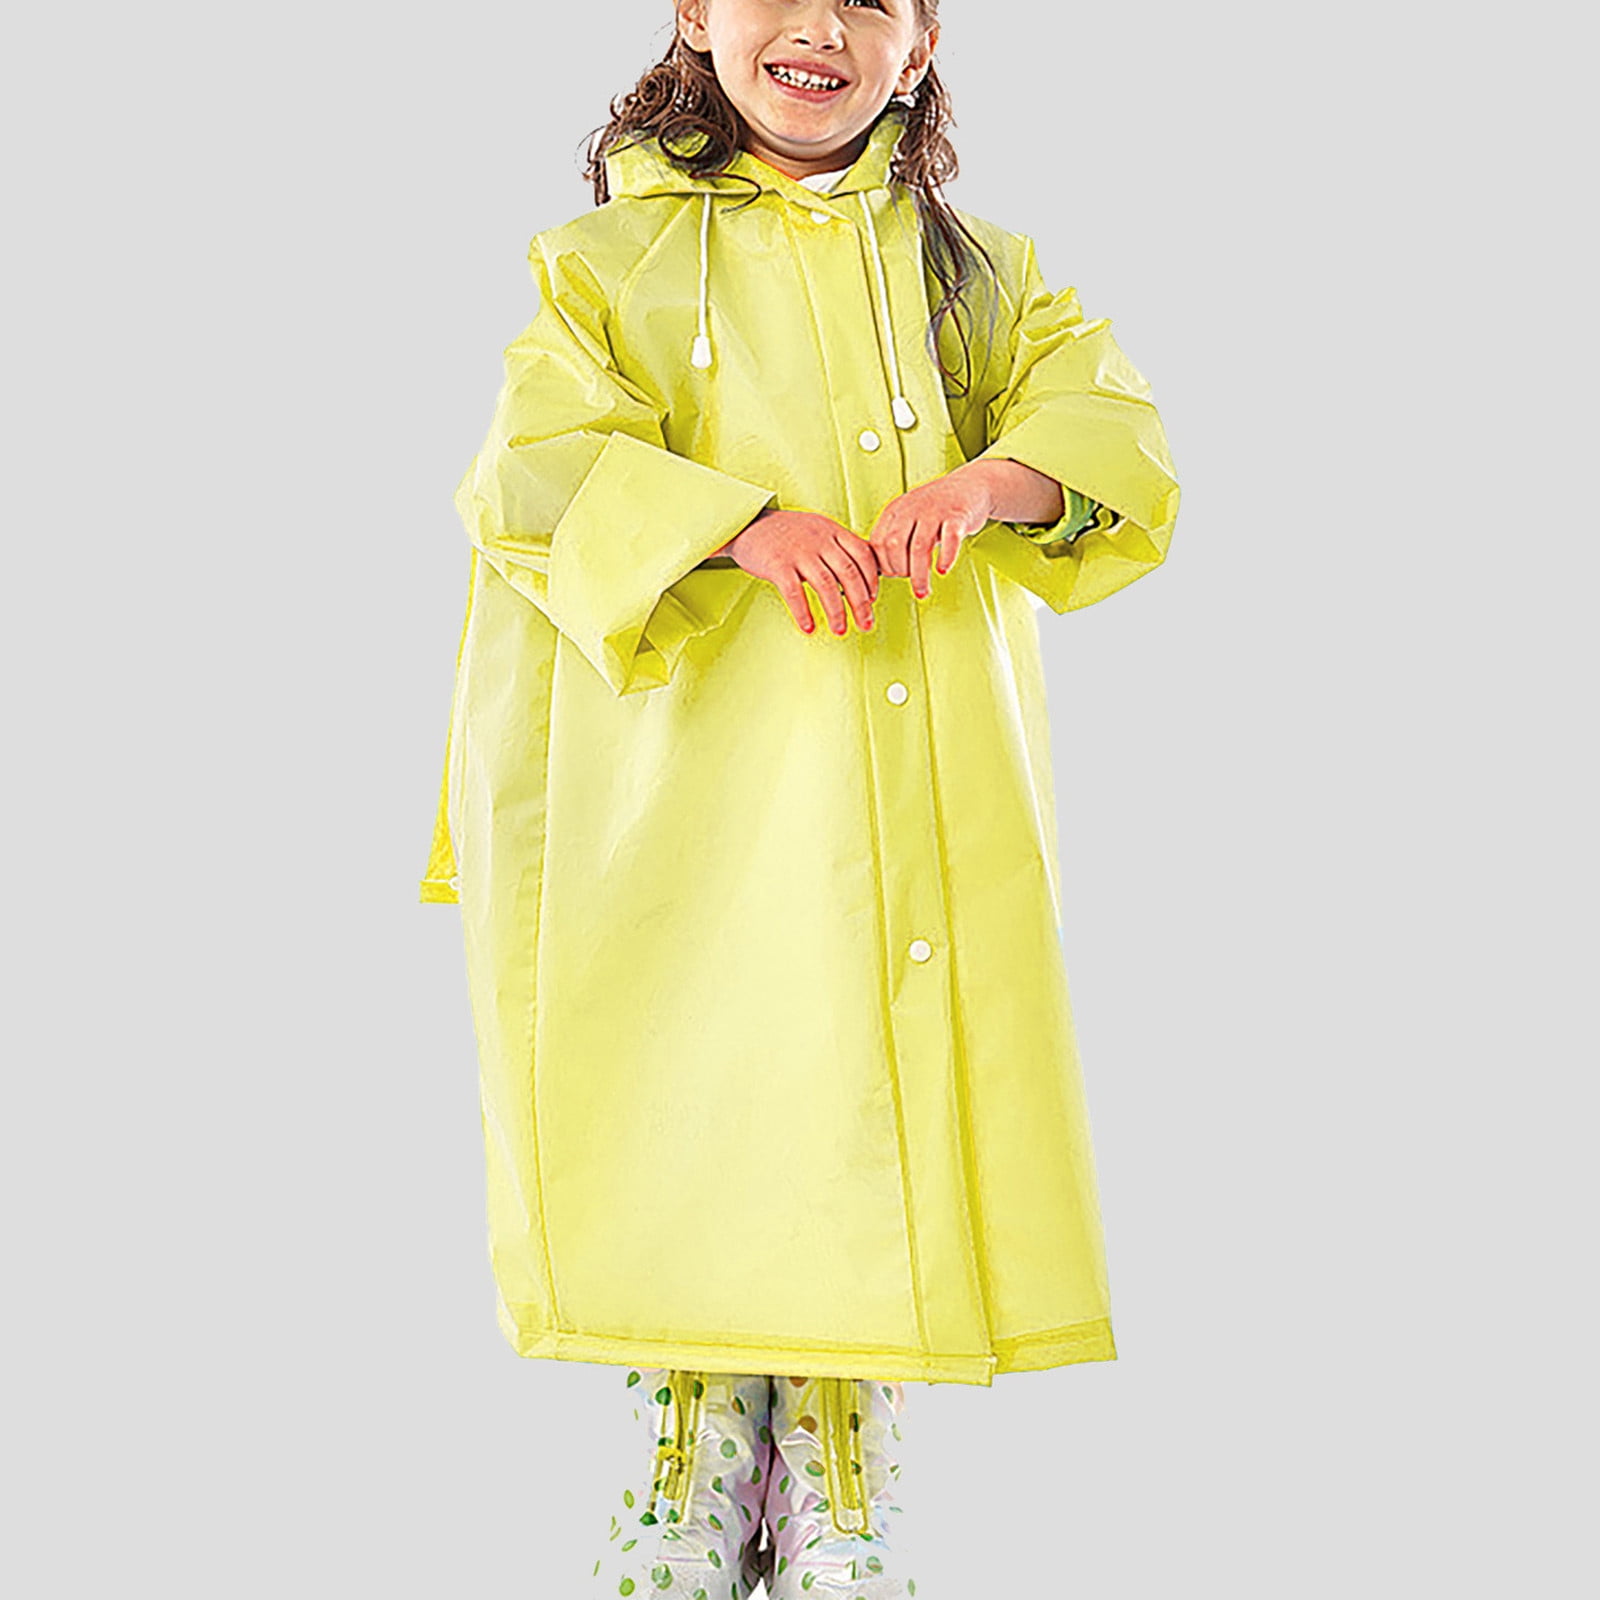 Amiley Kids Rainwear Boys Girls Children Hooded Jacket Rainsuit Rain Poncho Raincoat Long Rainwear 